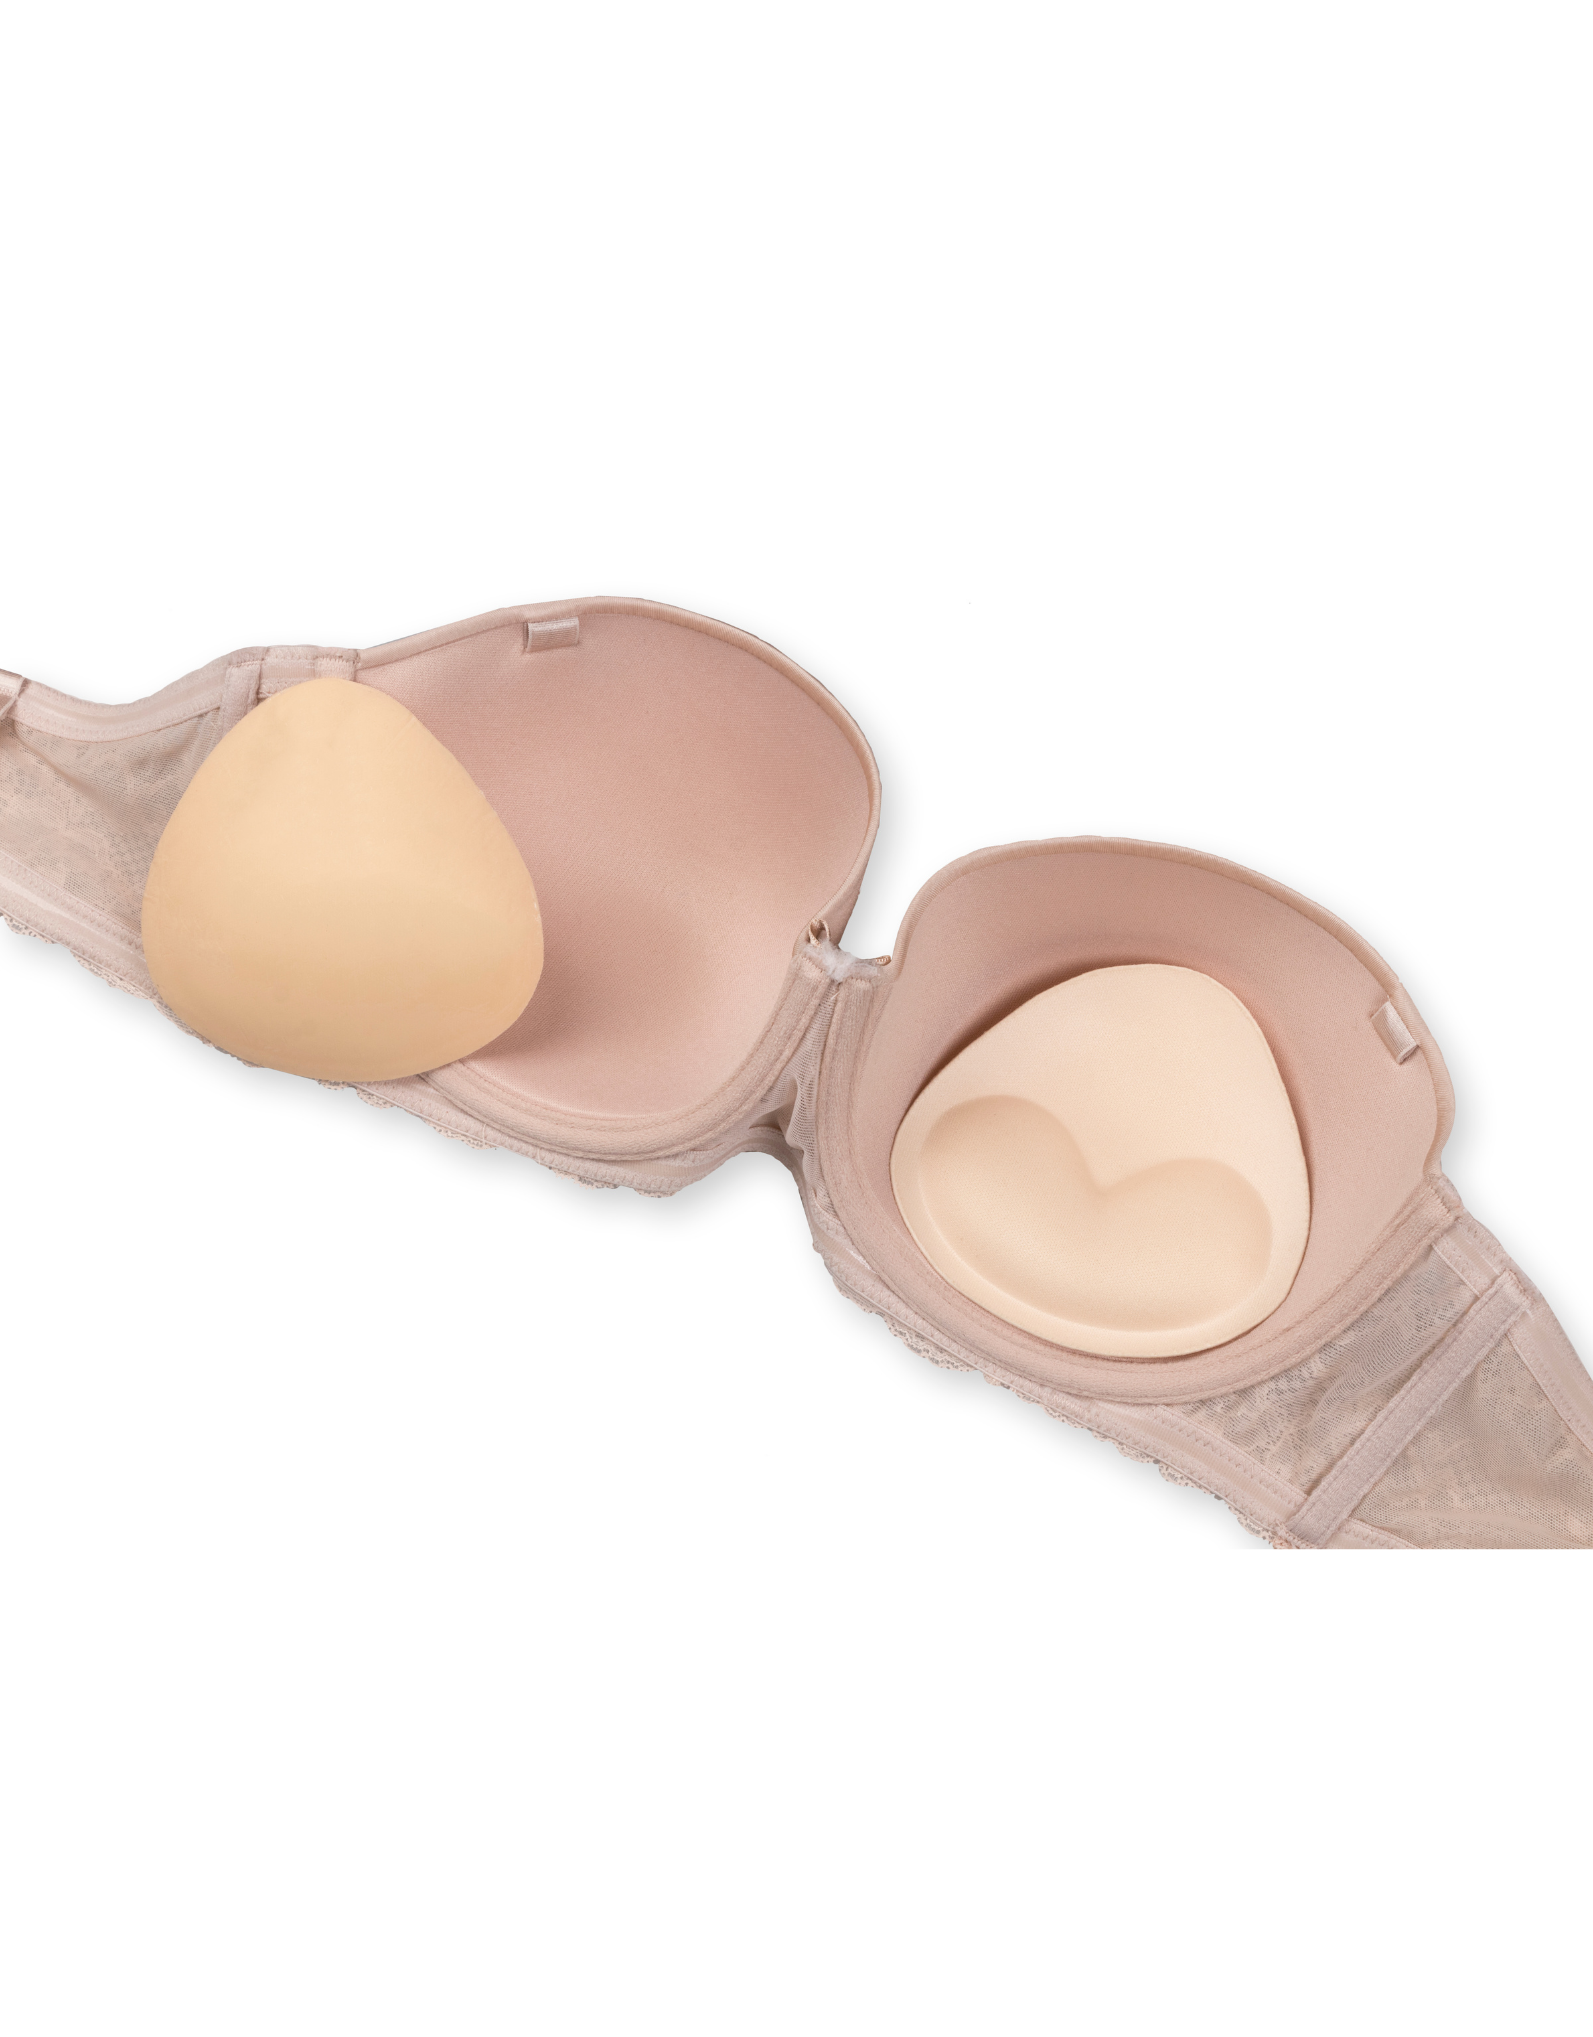 Bra Insert Pads, 1 Pair Bikini Swimsuit Push Up Silicone Bra Pads Women Breast  Lift Enhancer Pad, Nude-L 